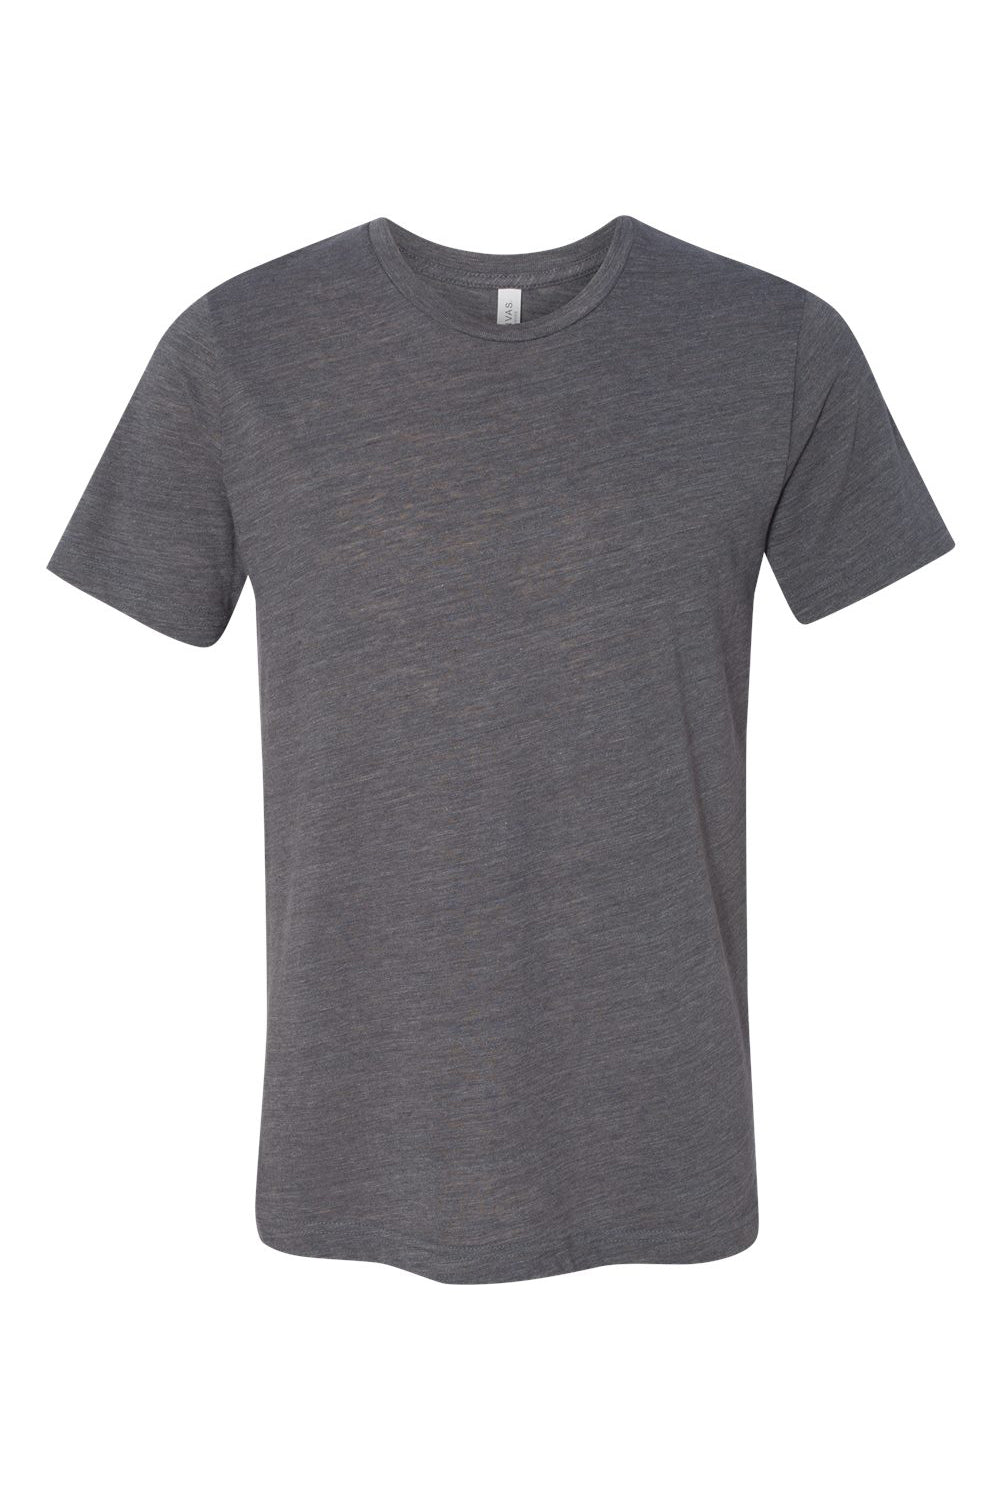 Bella + Canvas BC3650/3650 Mens Short Sleeve Crewneck T-Shirt Asphalt Grey Slub Flat Front